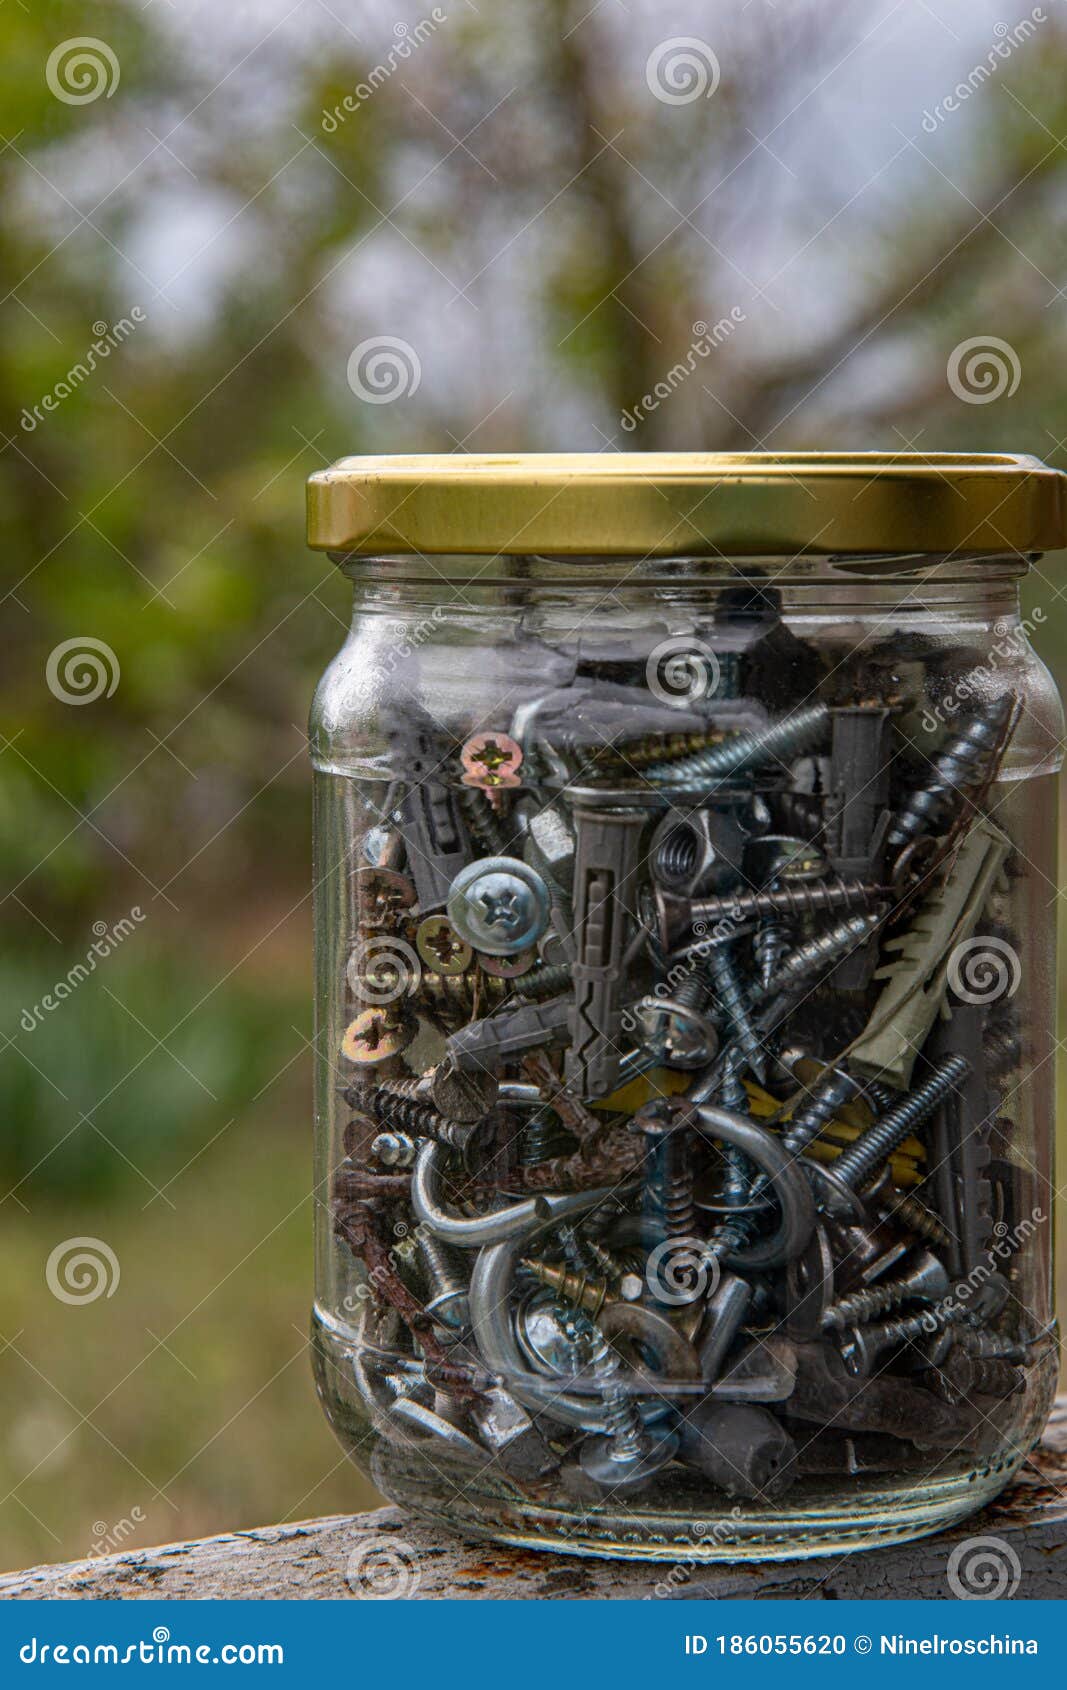 metalware storage inside jar with golden metal lid. industrial objects closeup